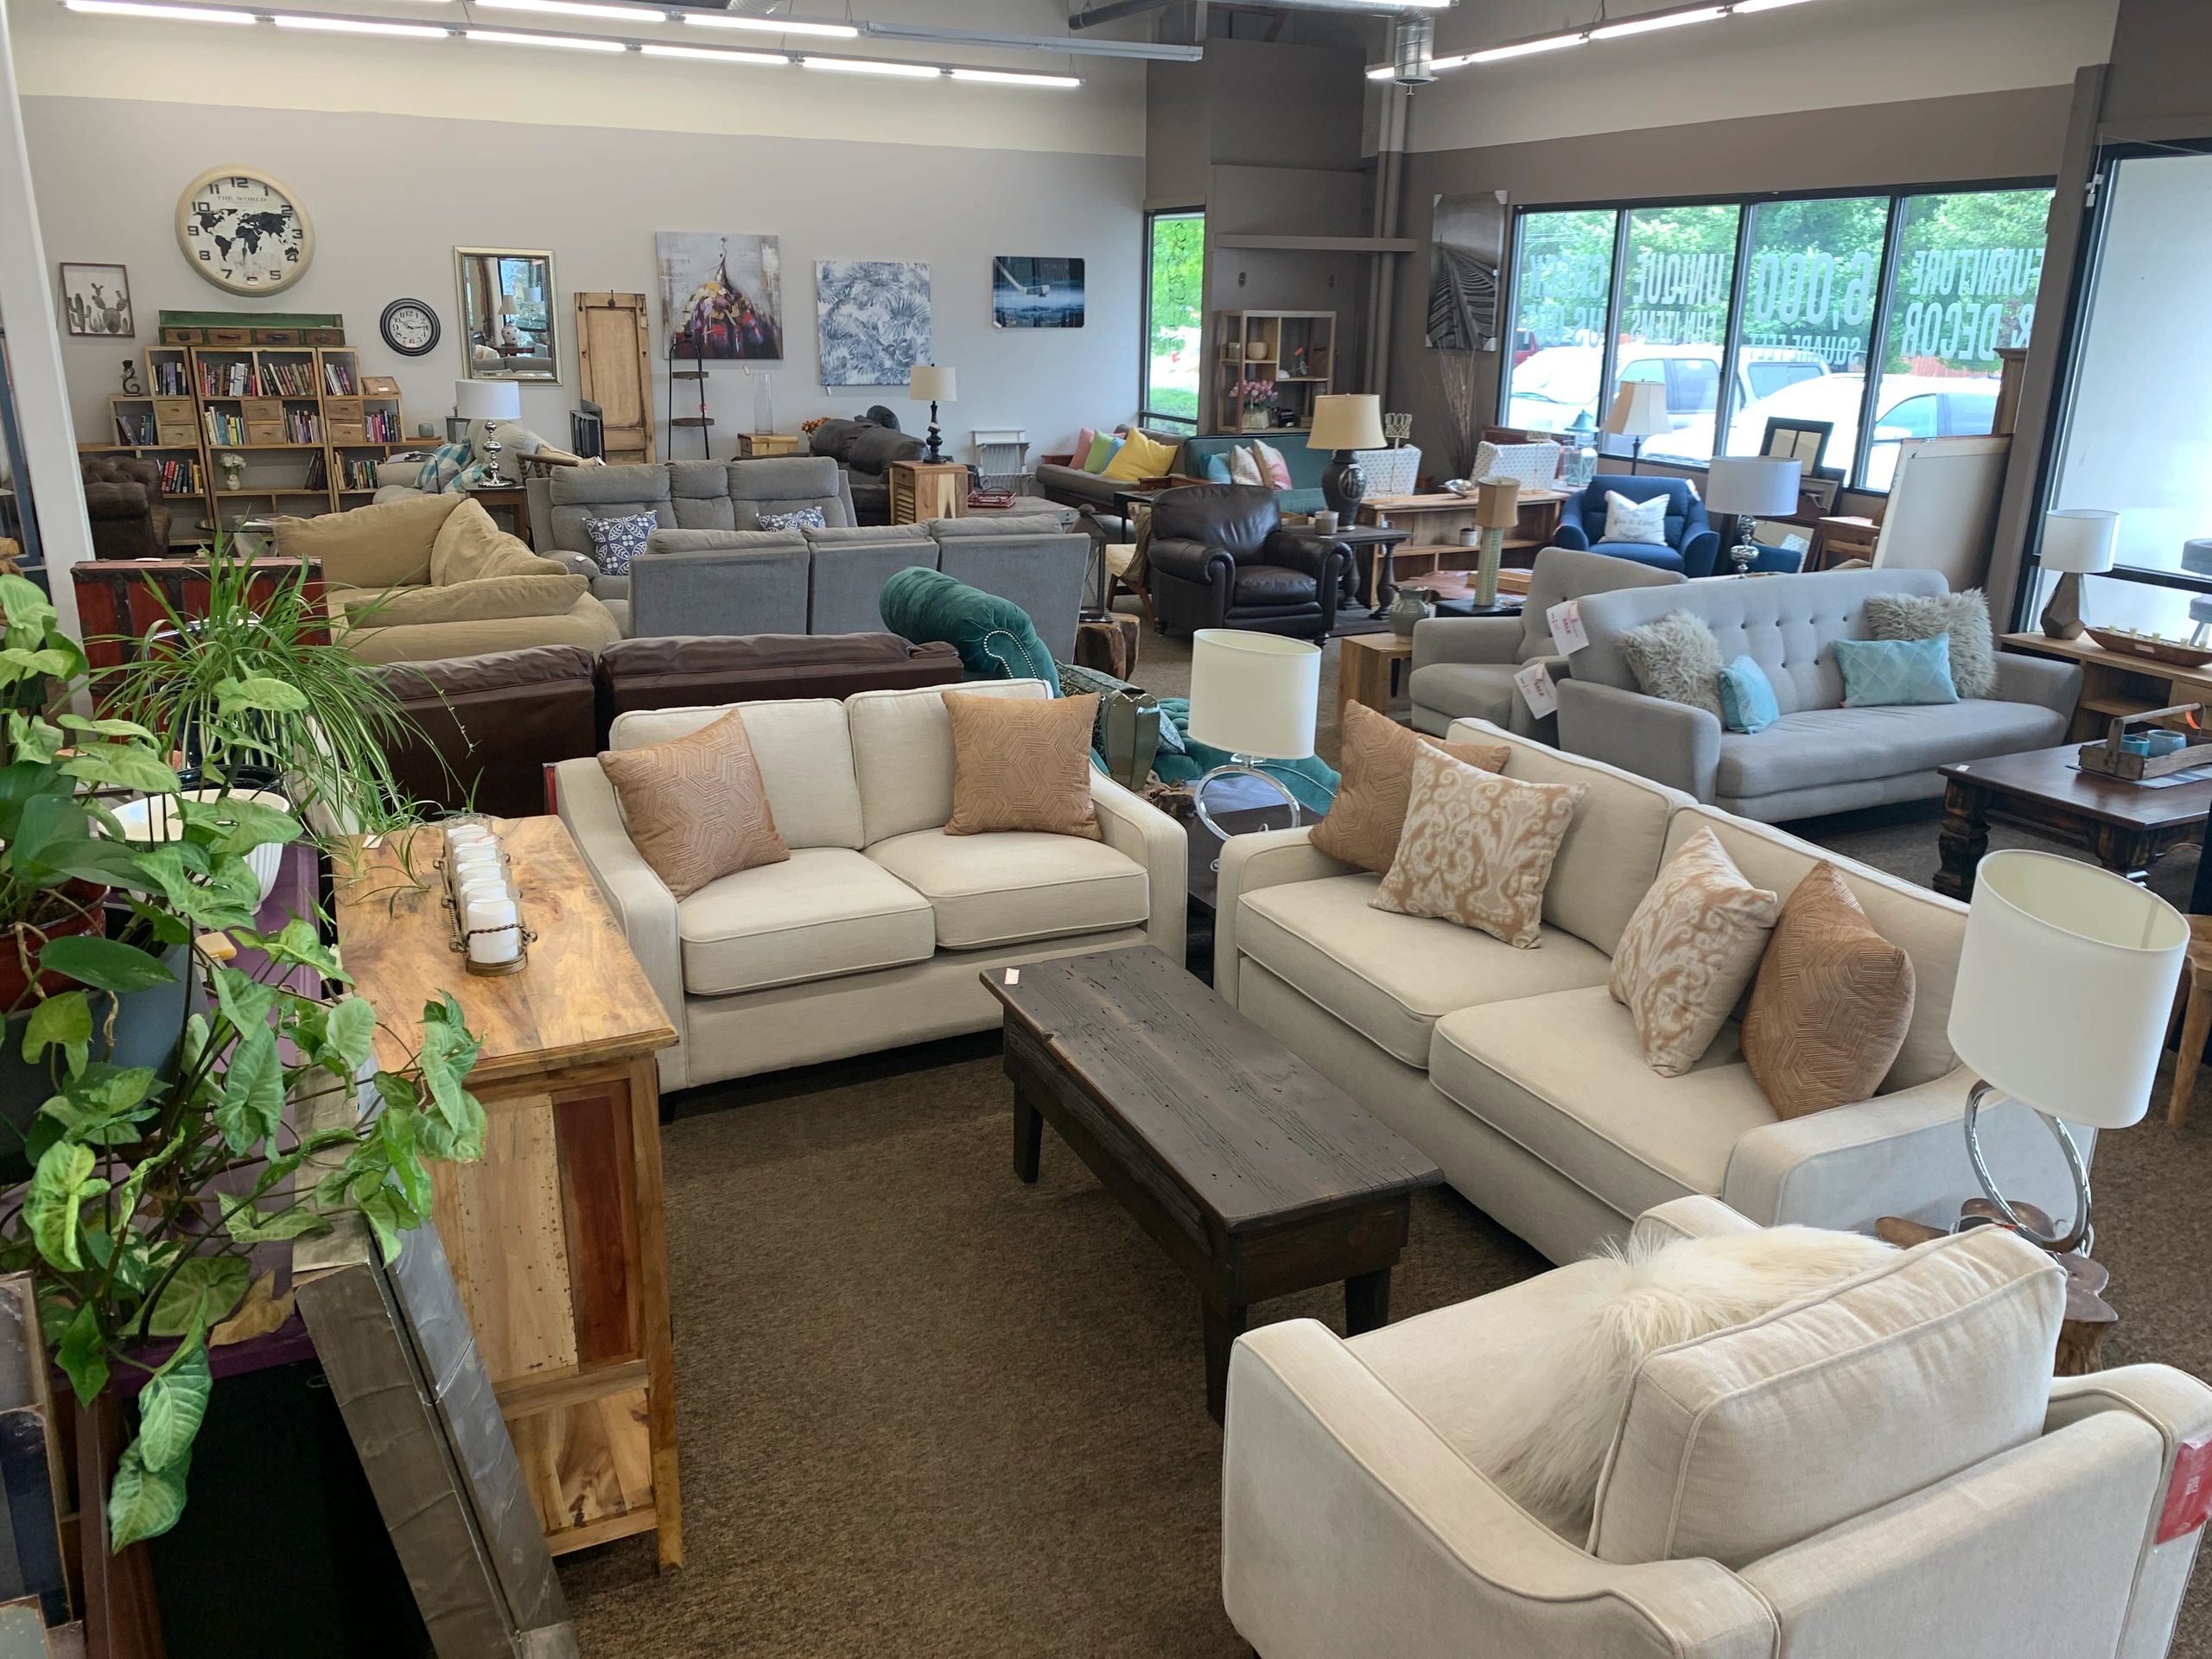 Furniture Store, Consignment Store - Boise Furniture - Boise, Idaho